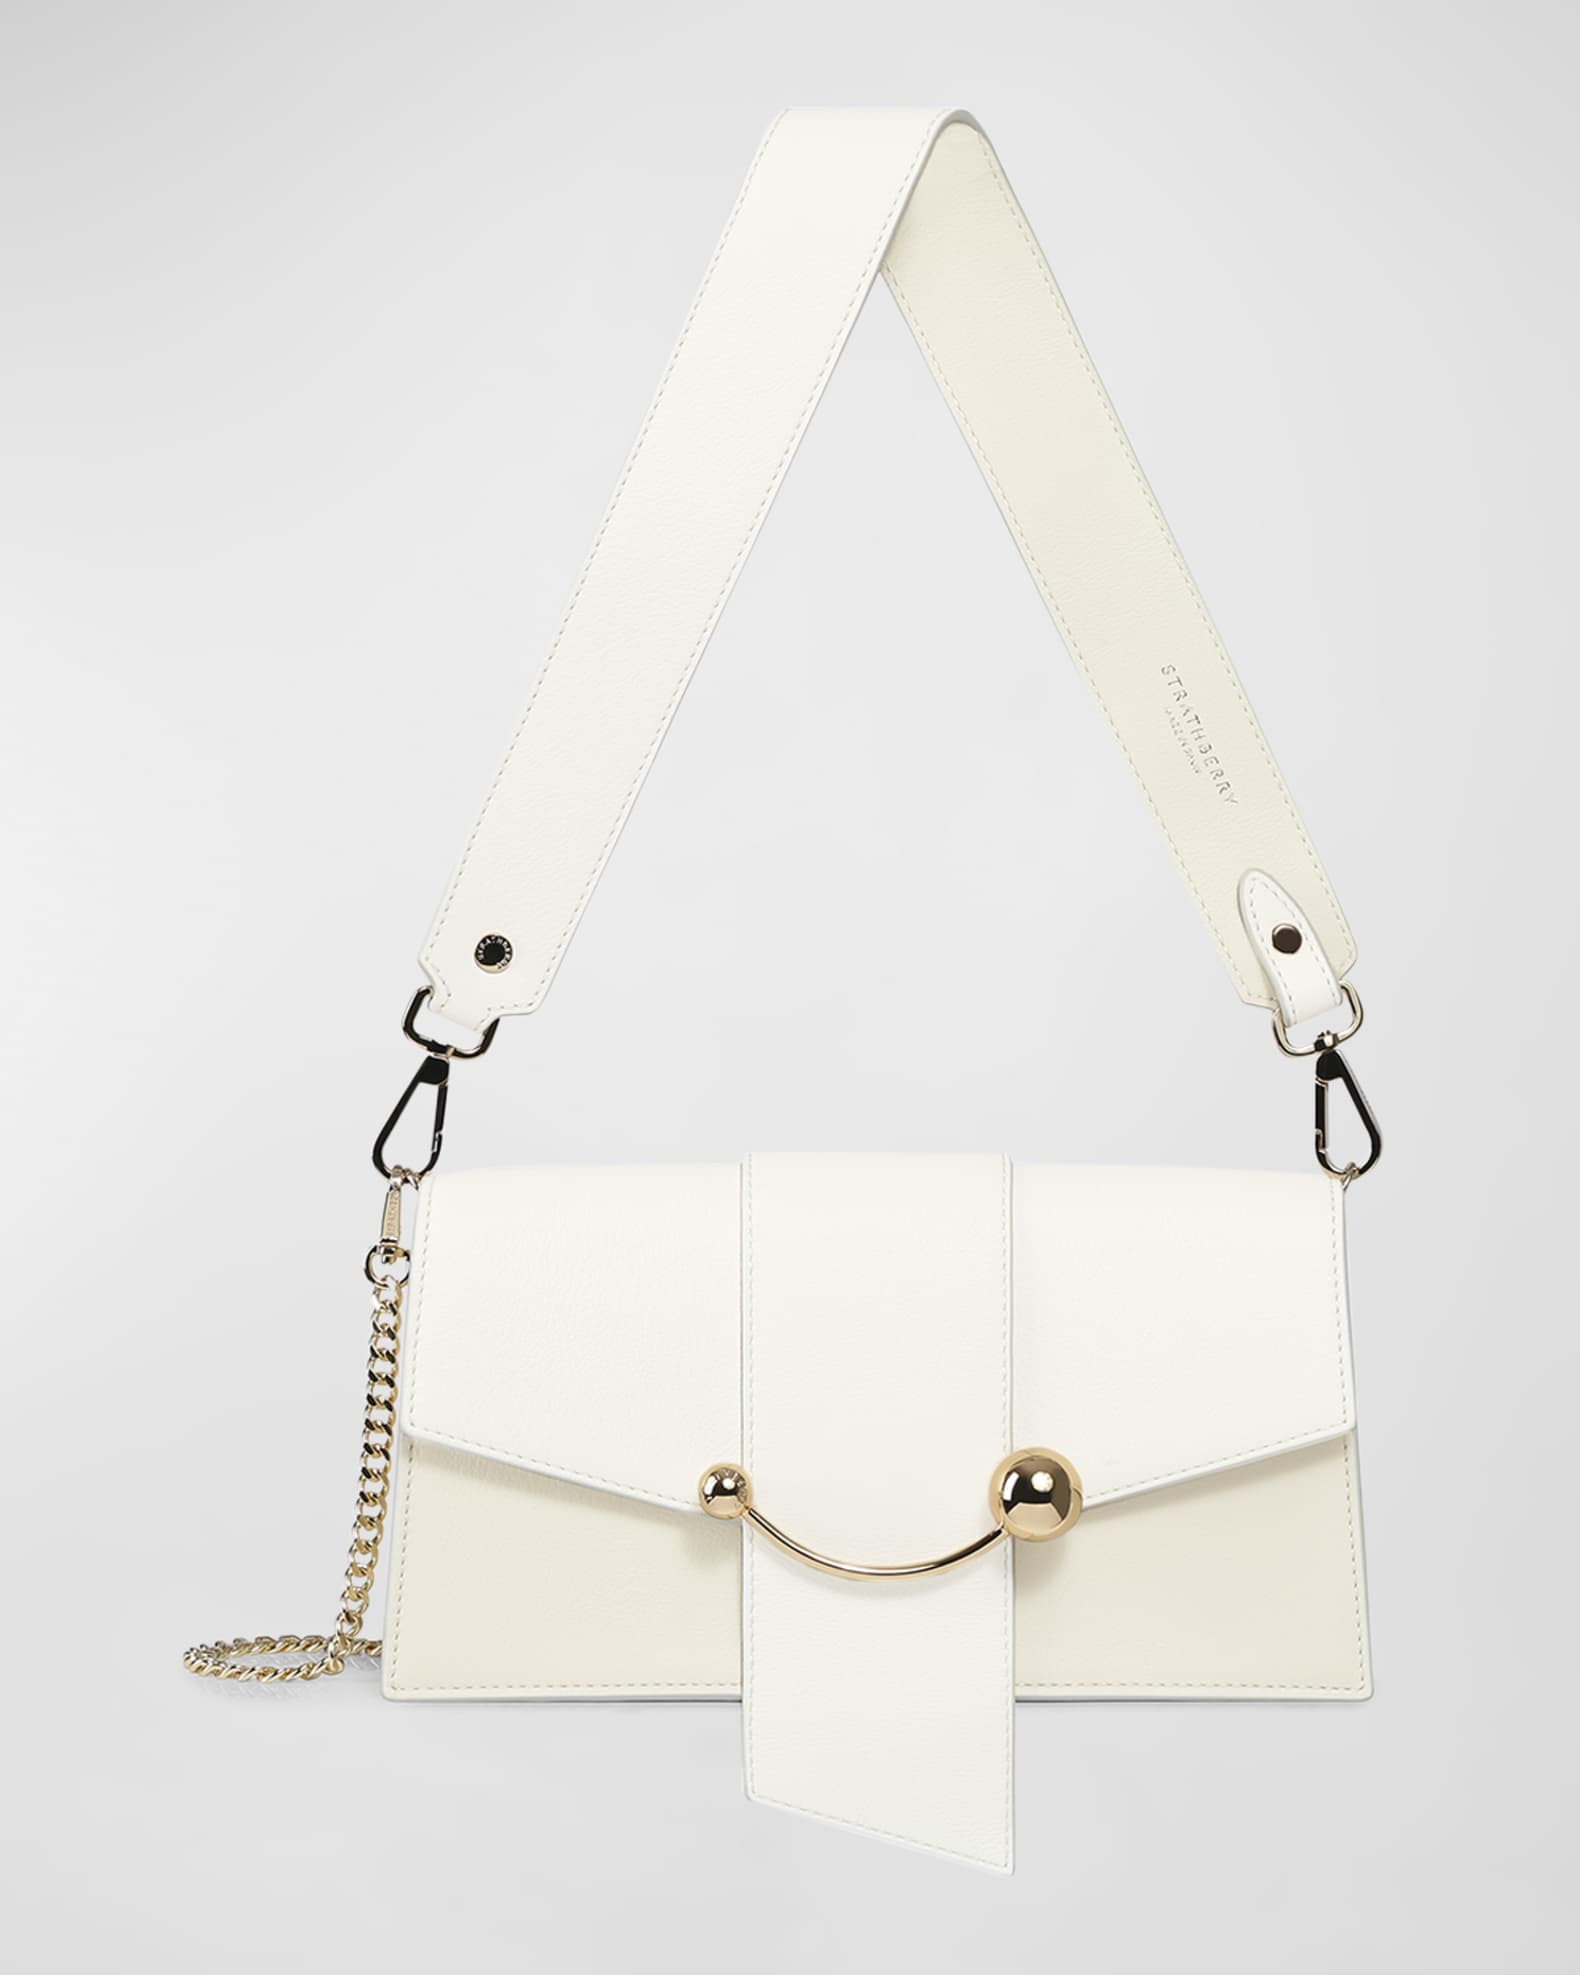 Strathberry Mini Crescent Leather Shoulder Bag